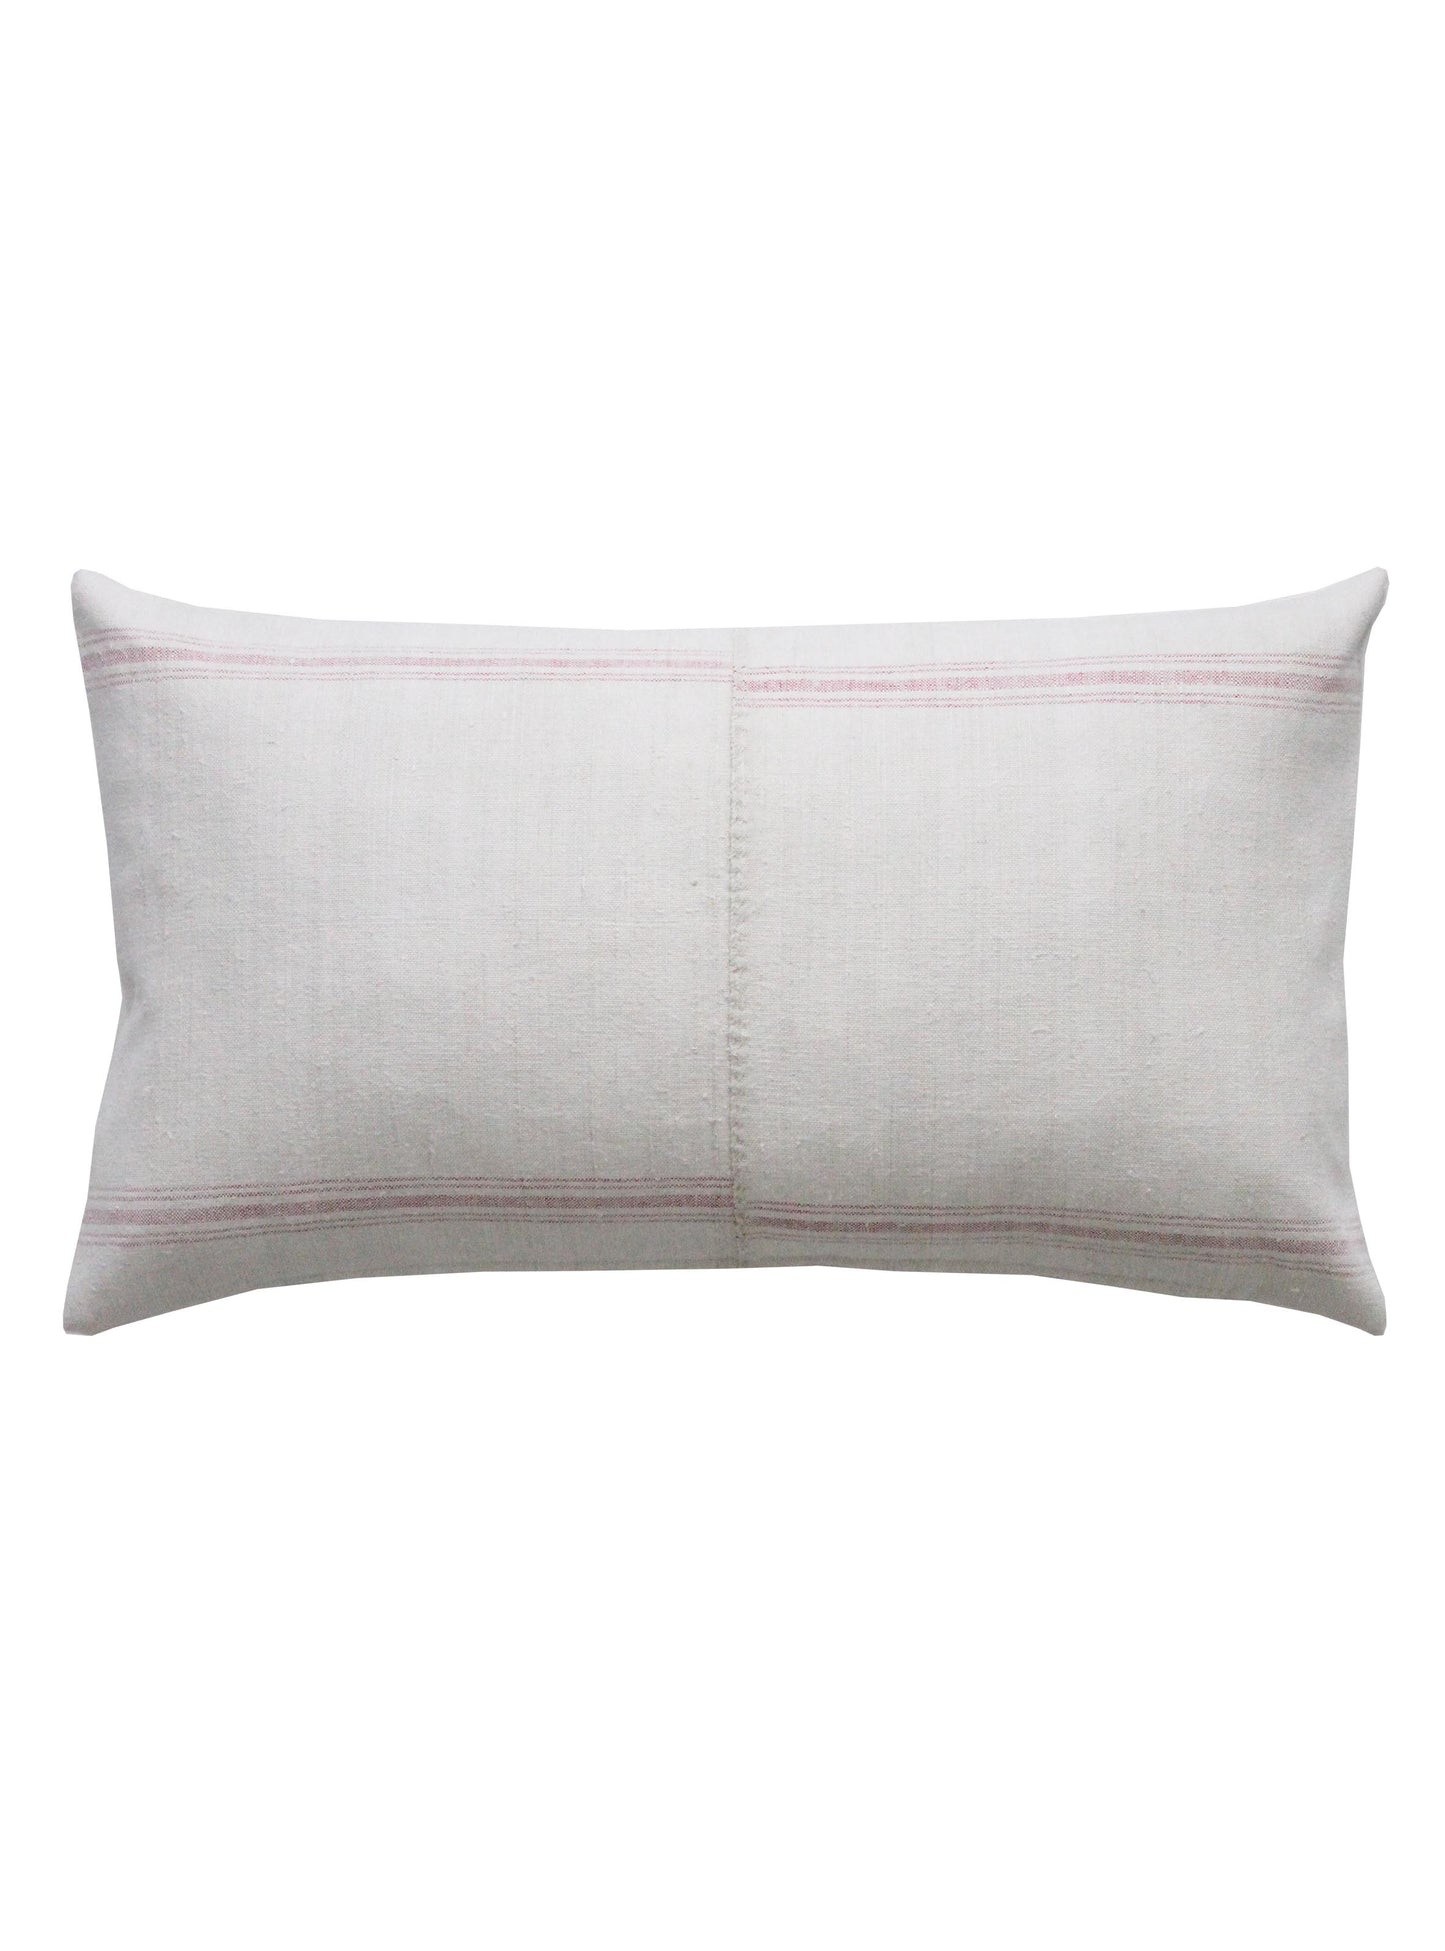 Vintage Pink Stripe Linen Cushions